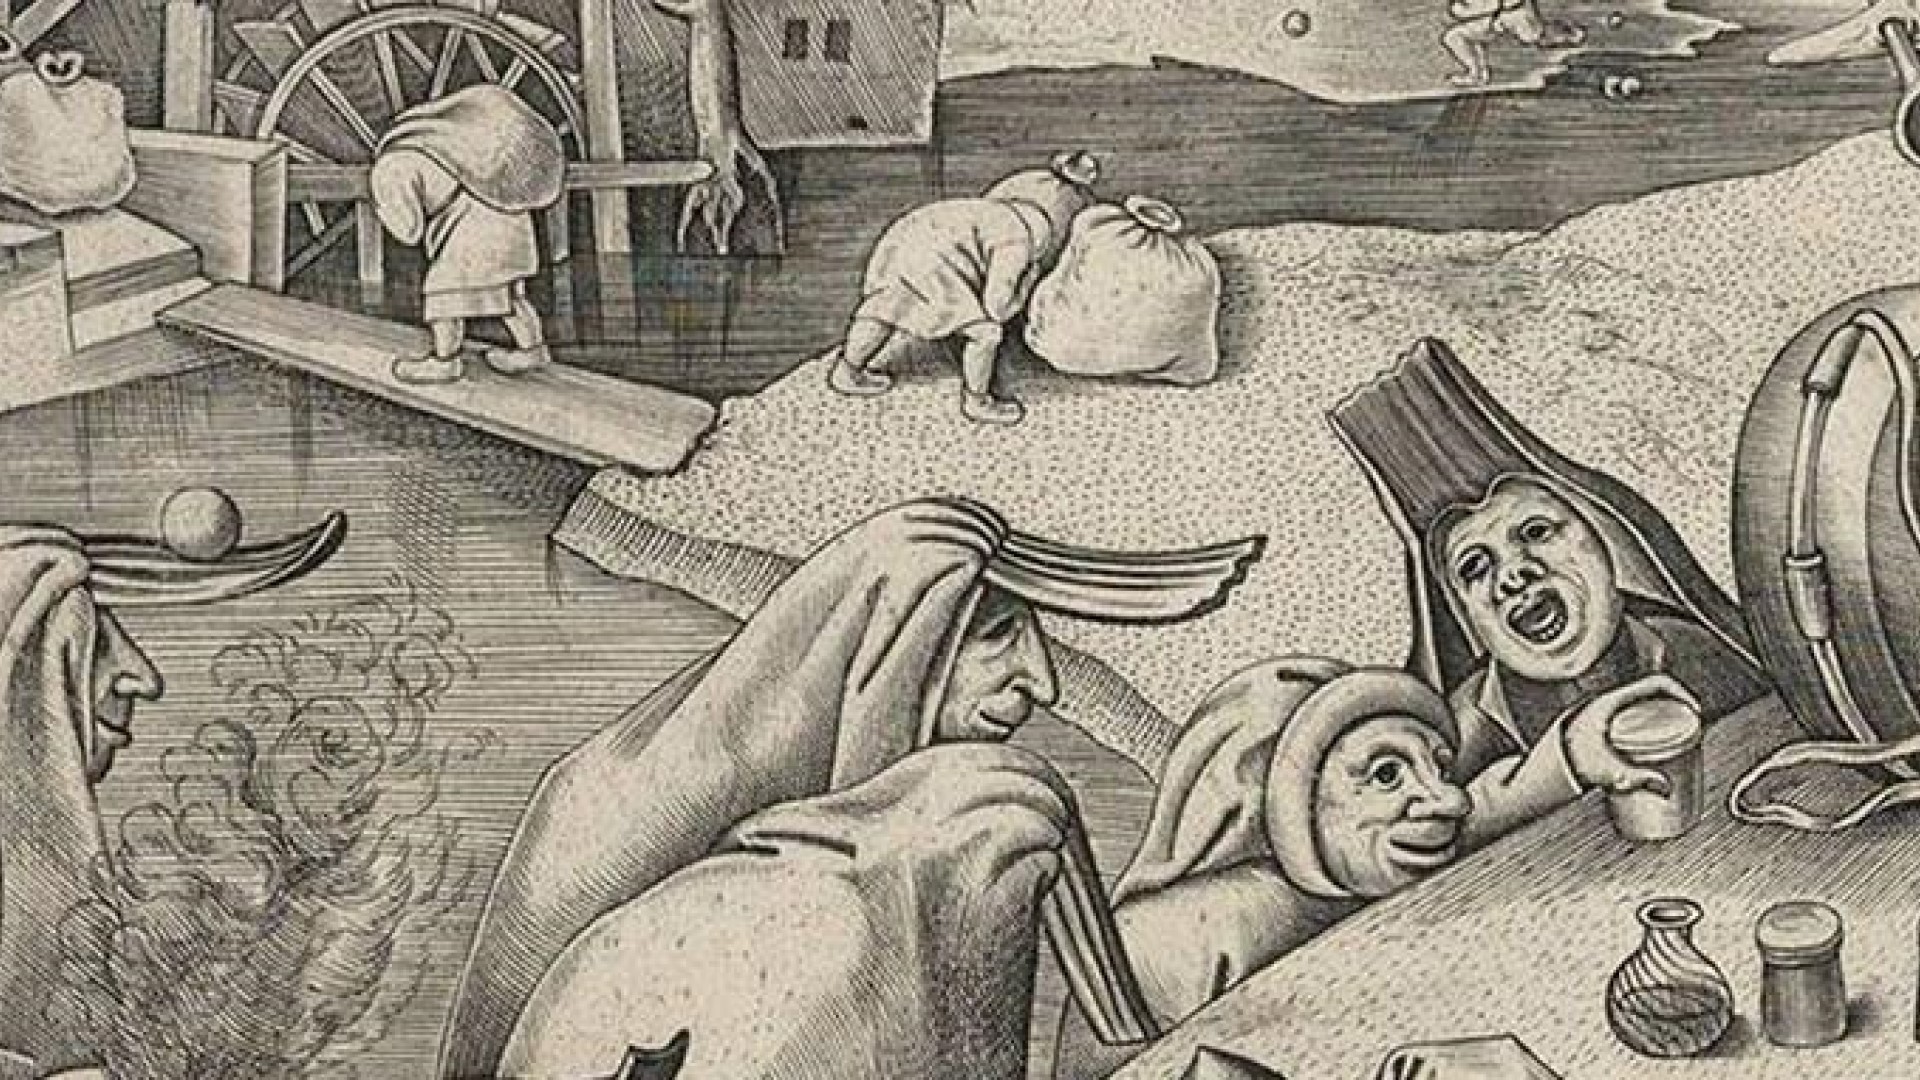 The witches of Pieter Bruegel The Elder